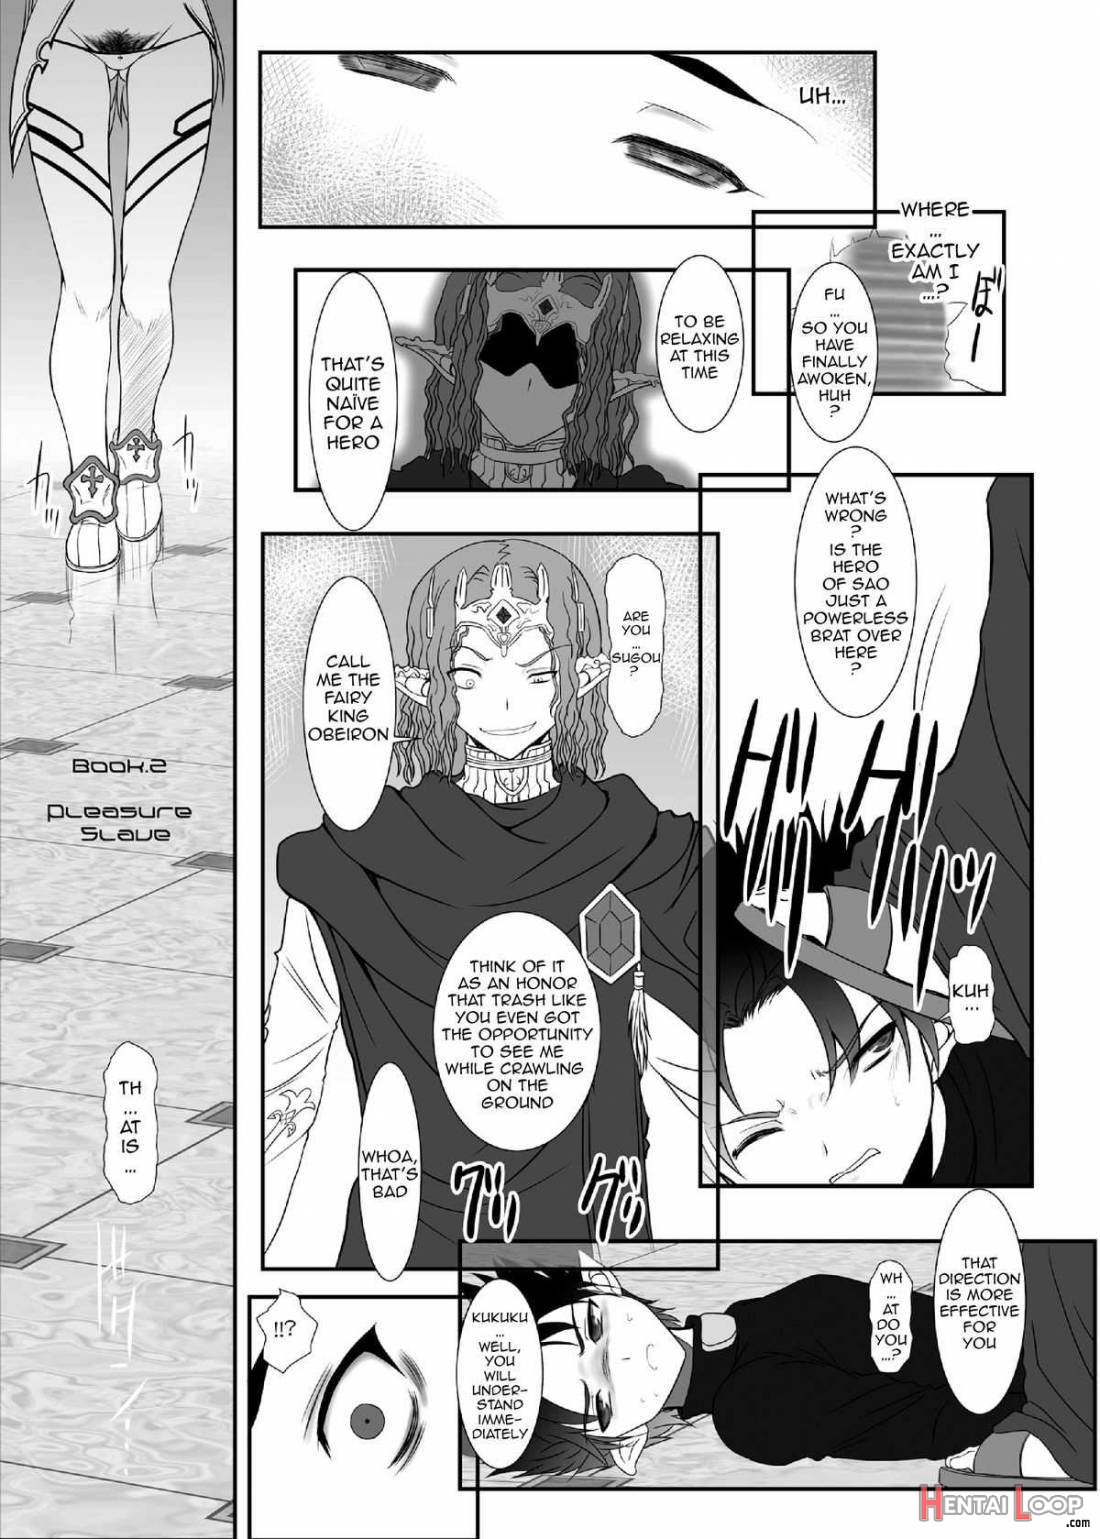 Slave Asuna On-demand #002 - Pleasure Slave. page 7